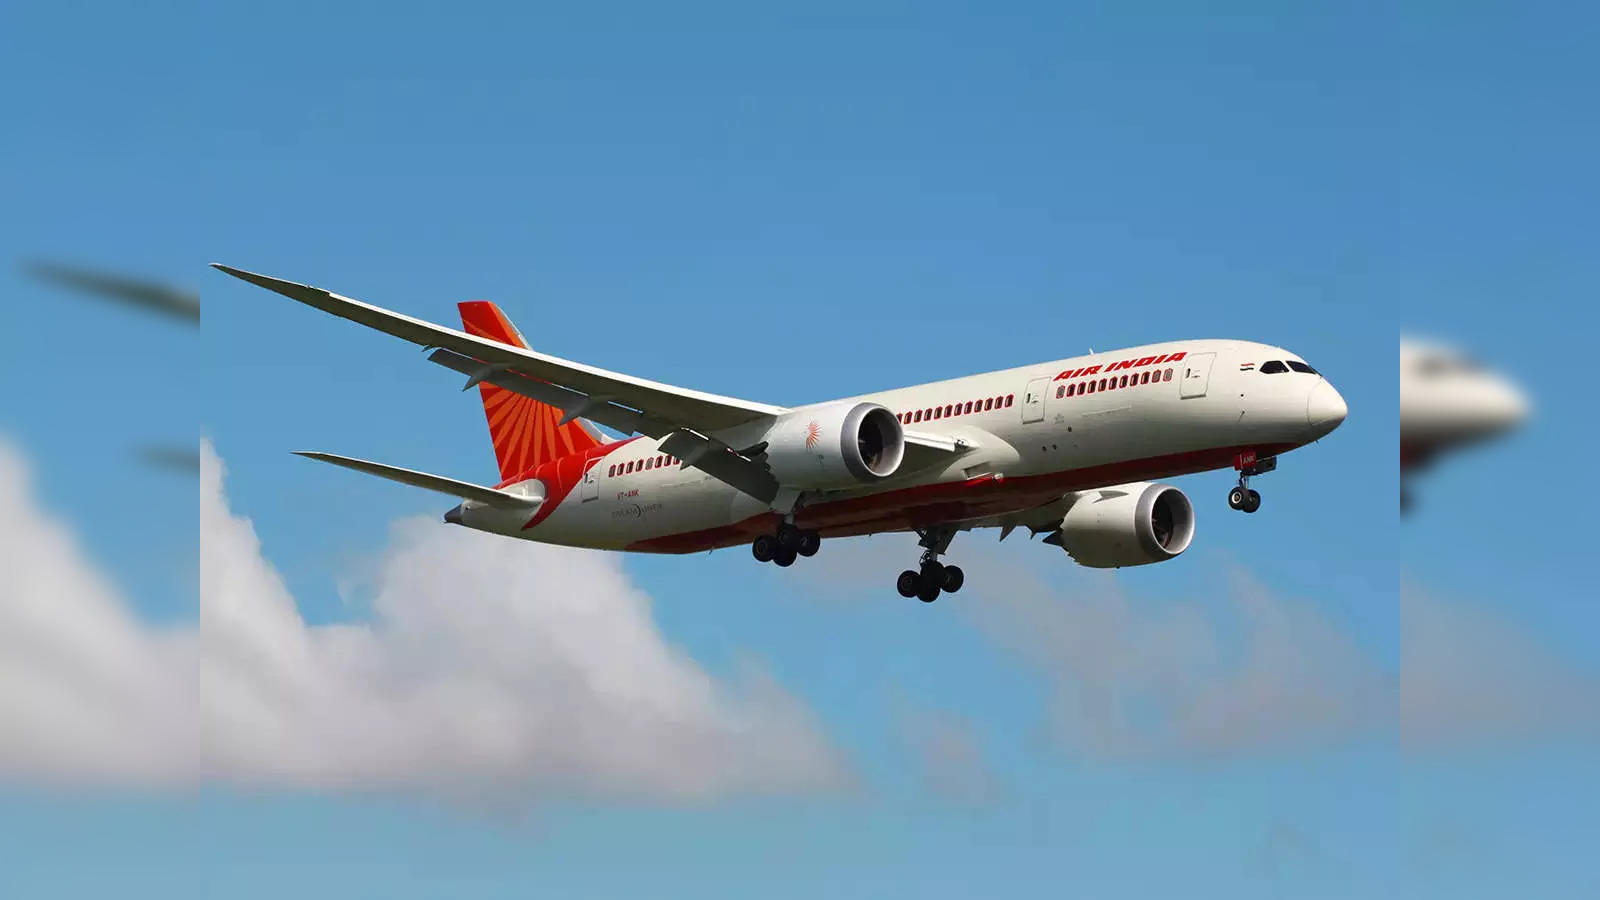 Boeing 747 Jumbo Jet - Air India